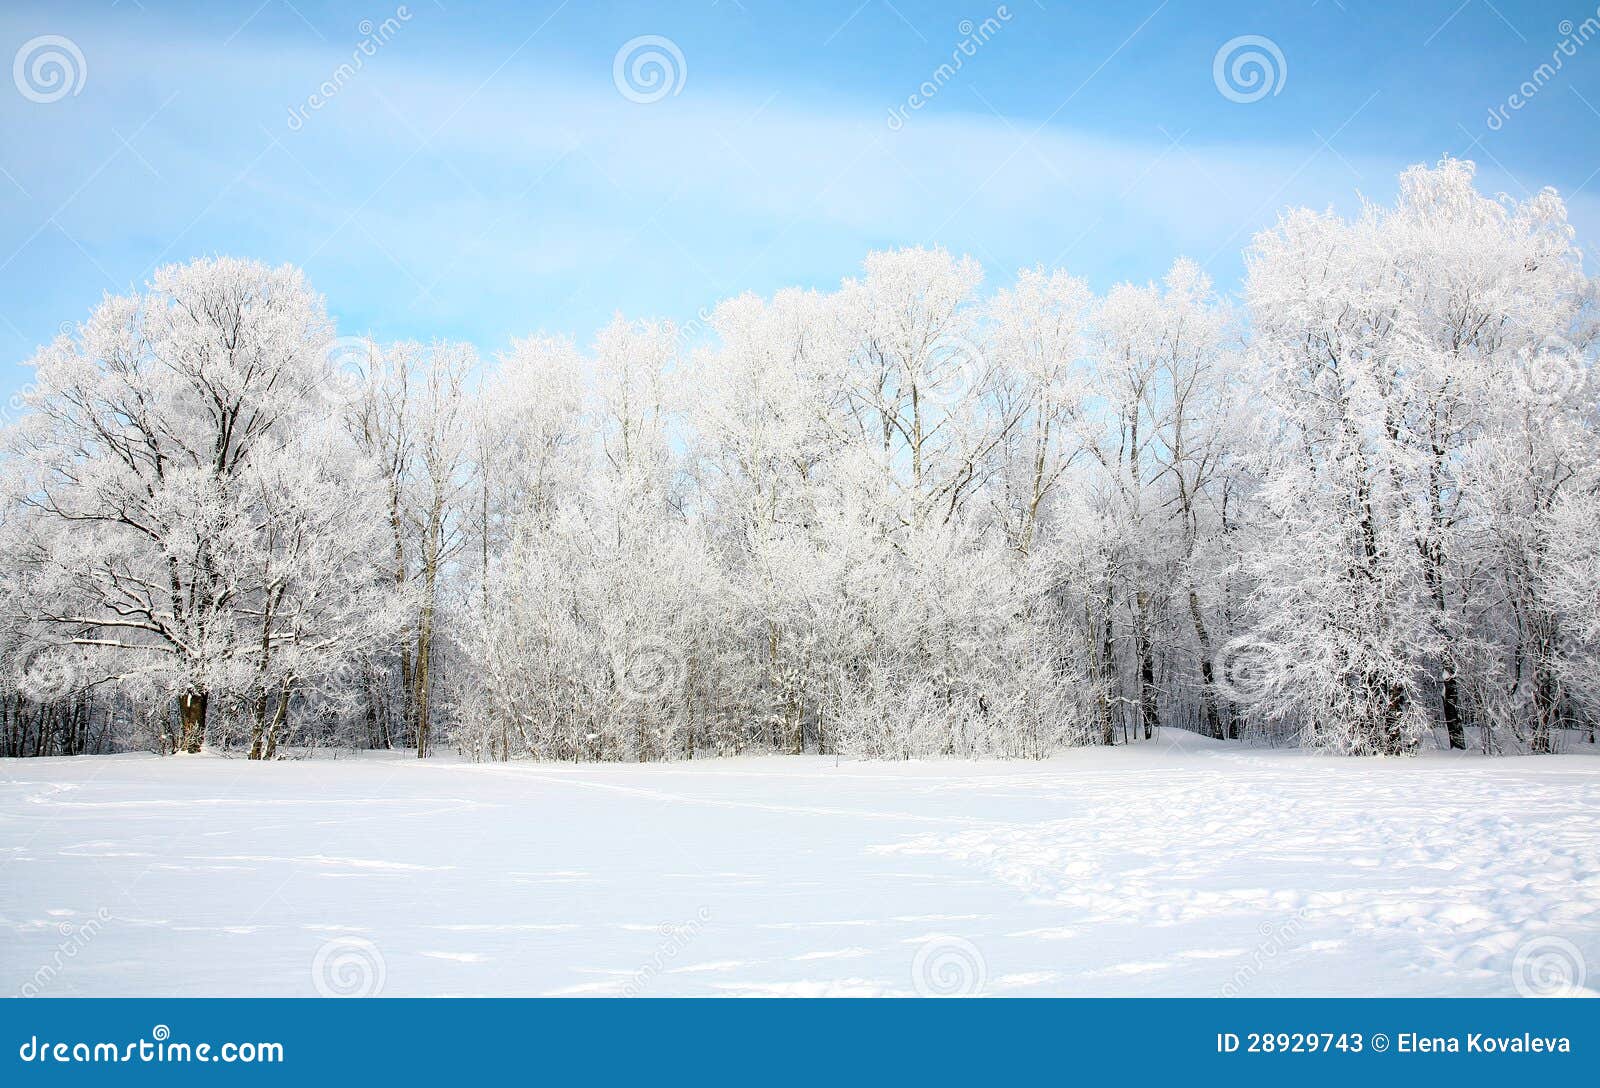 russian winter in january